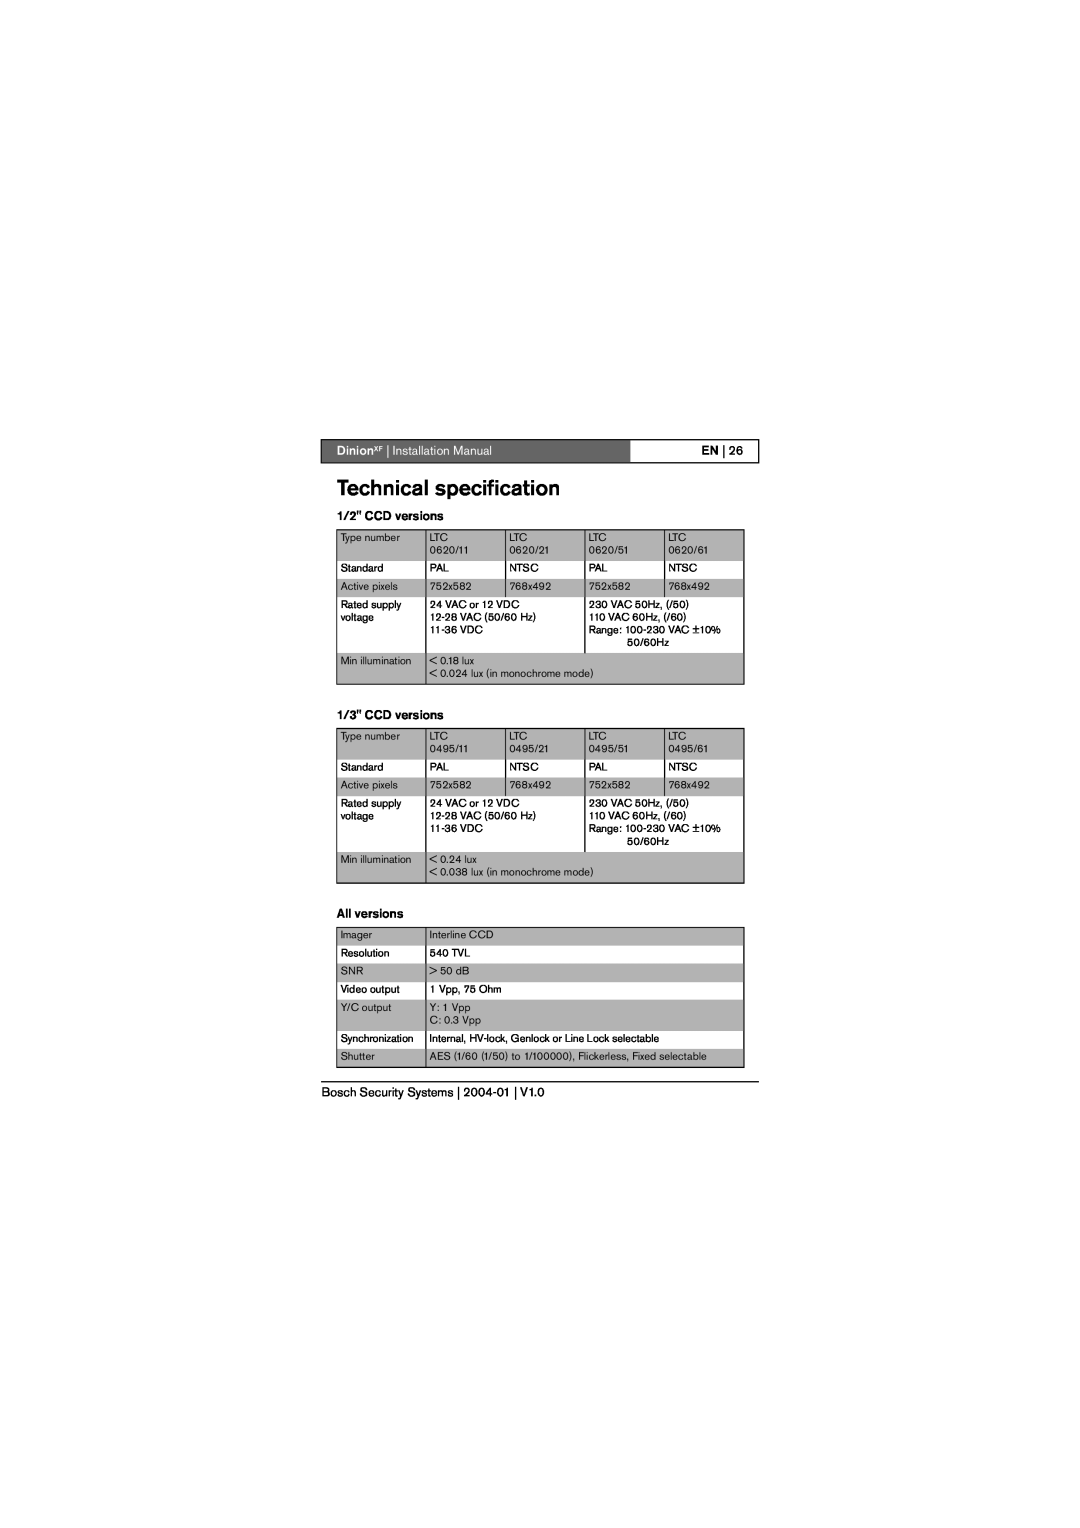 Bosch Appliances LTC 0495, LTC 0620 Technical specification, 1/2 CCD versions, 1/3 CCD versions, All versions, En 